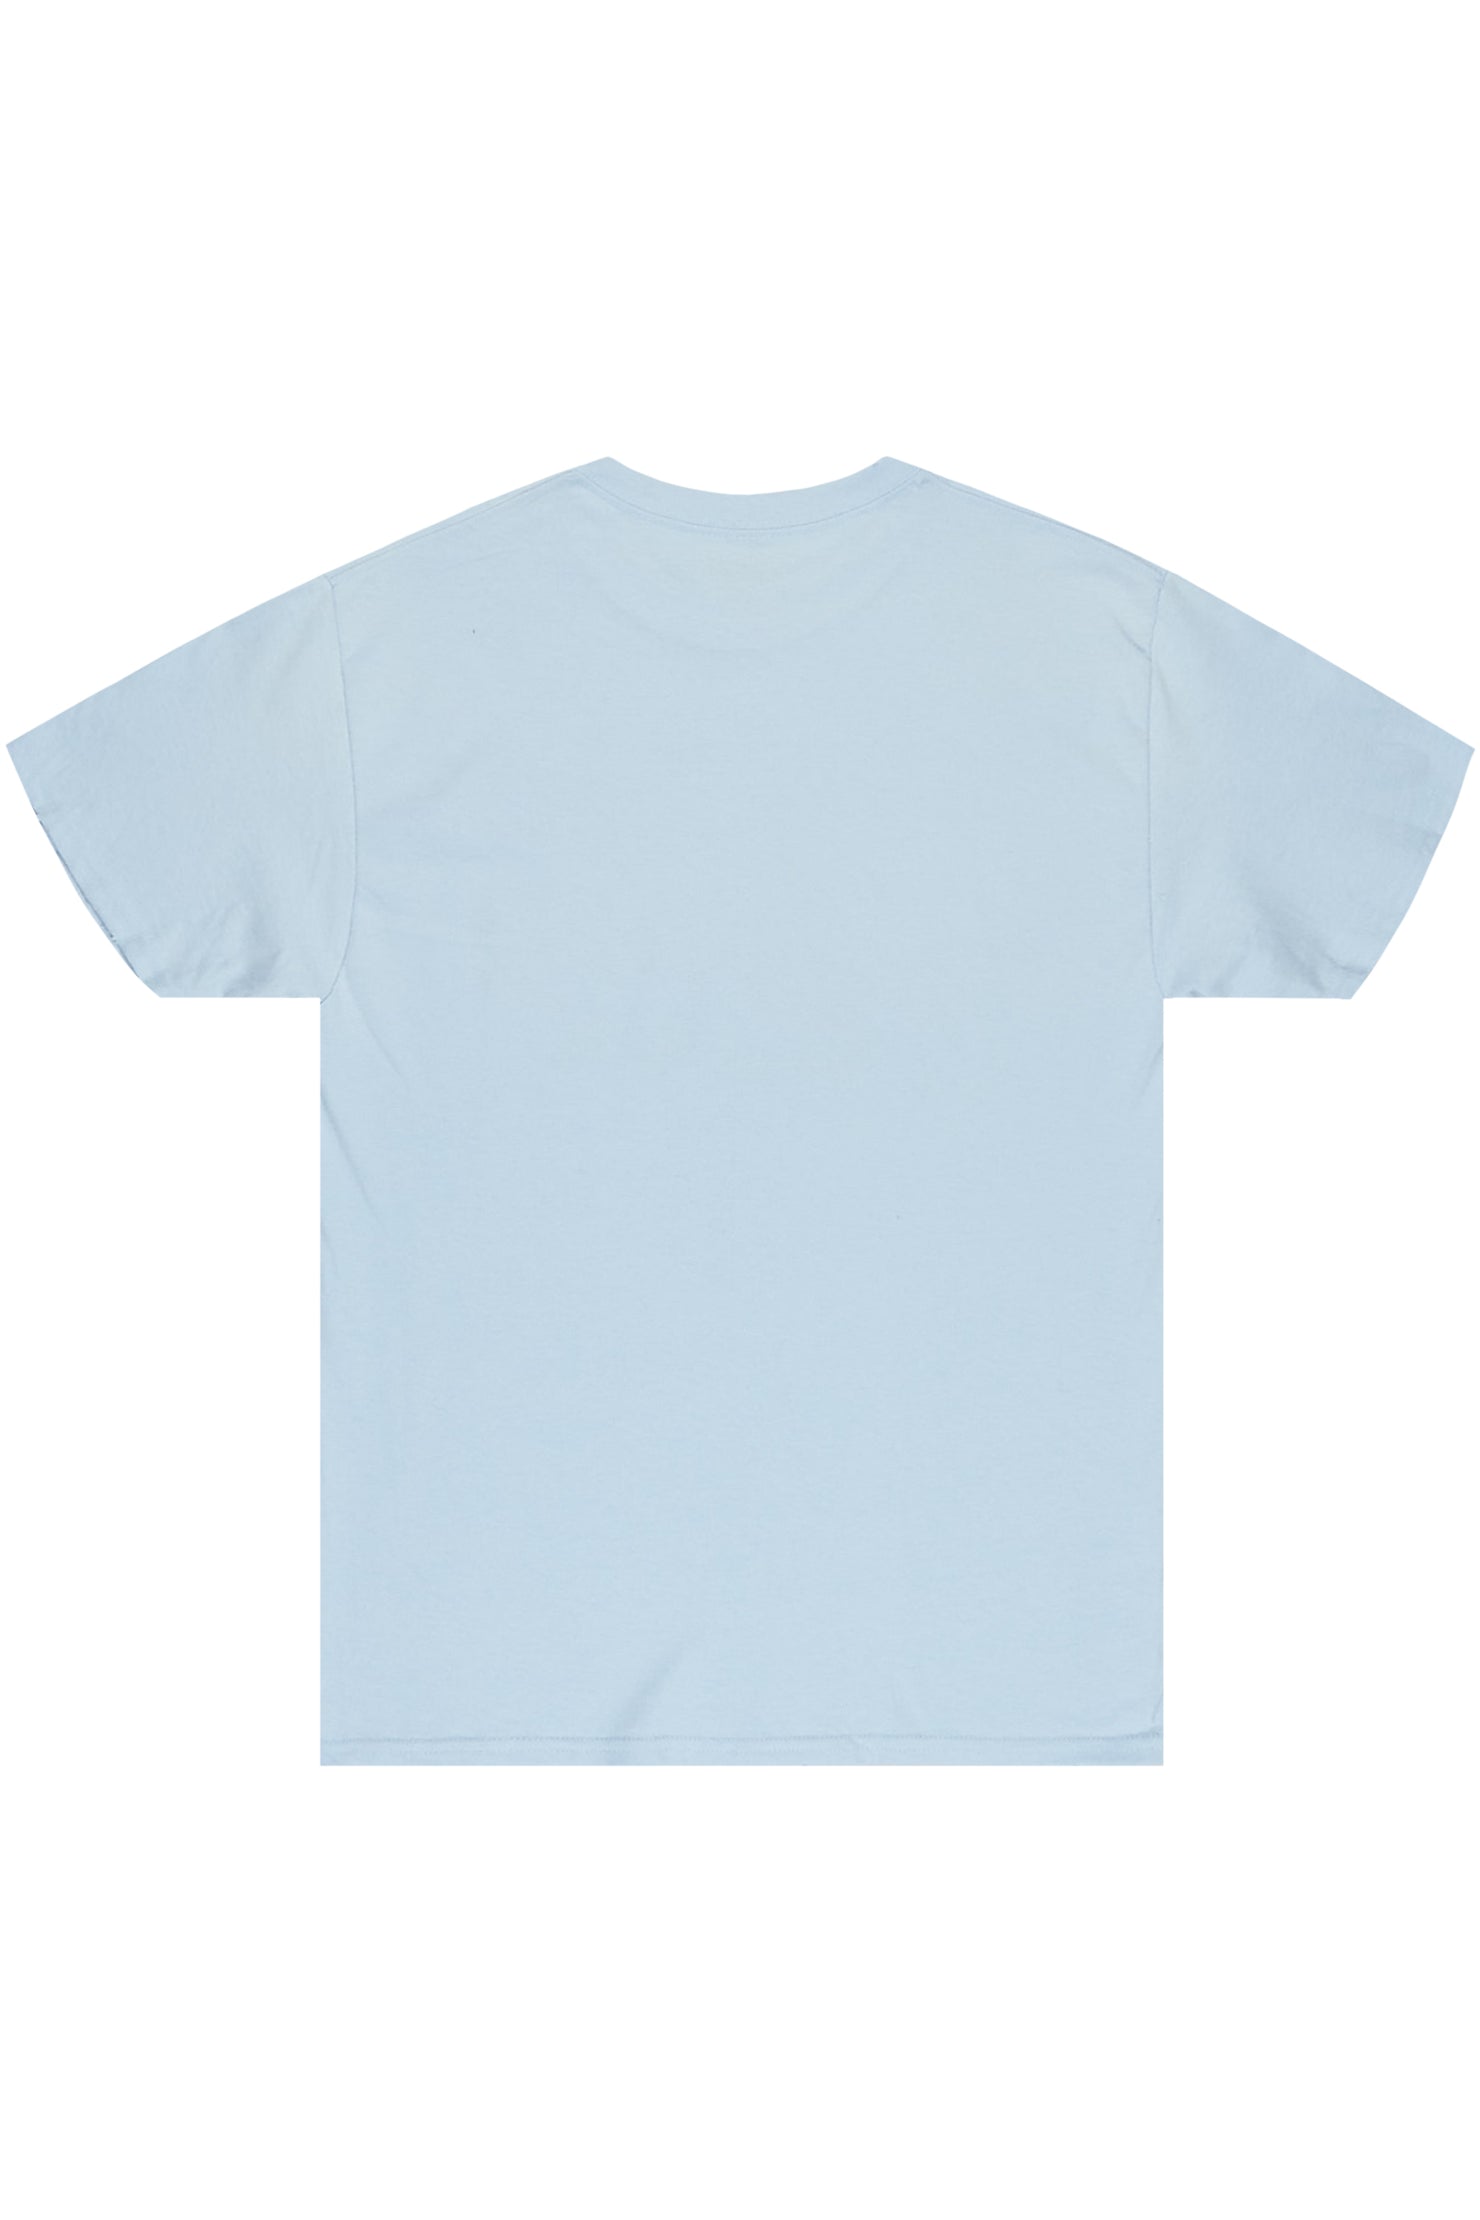 Graphic Blue Rockstar Original T-Shirt– Zustrand Light